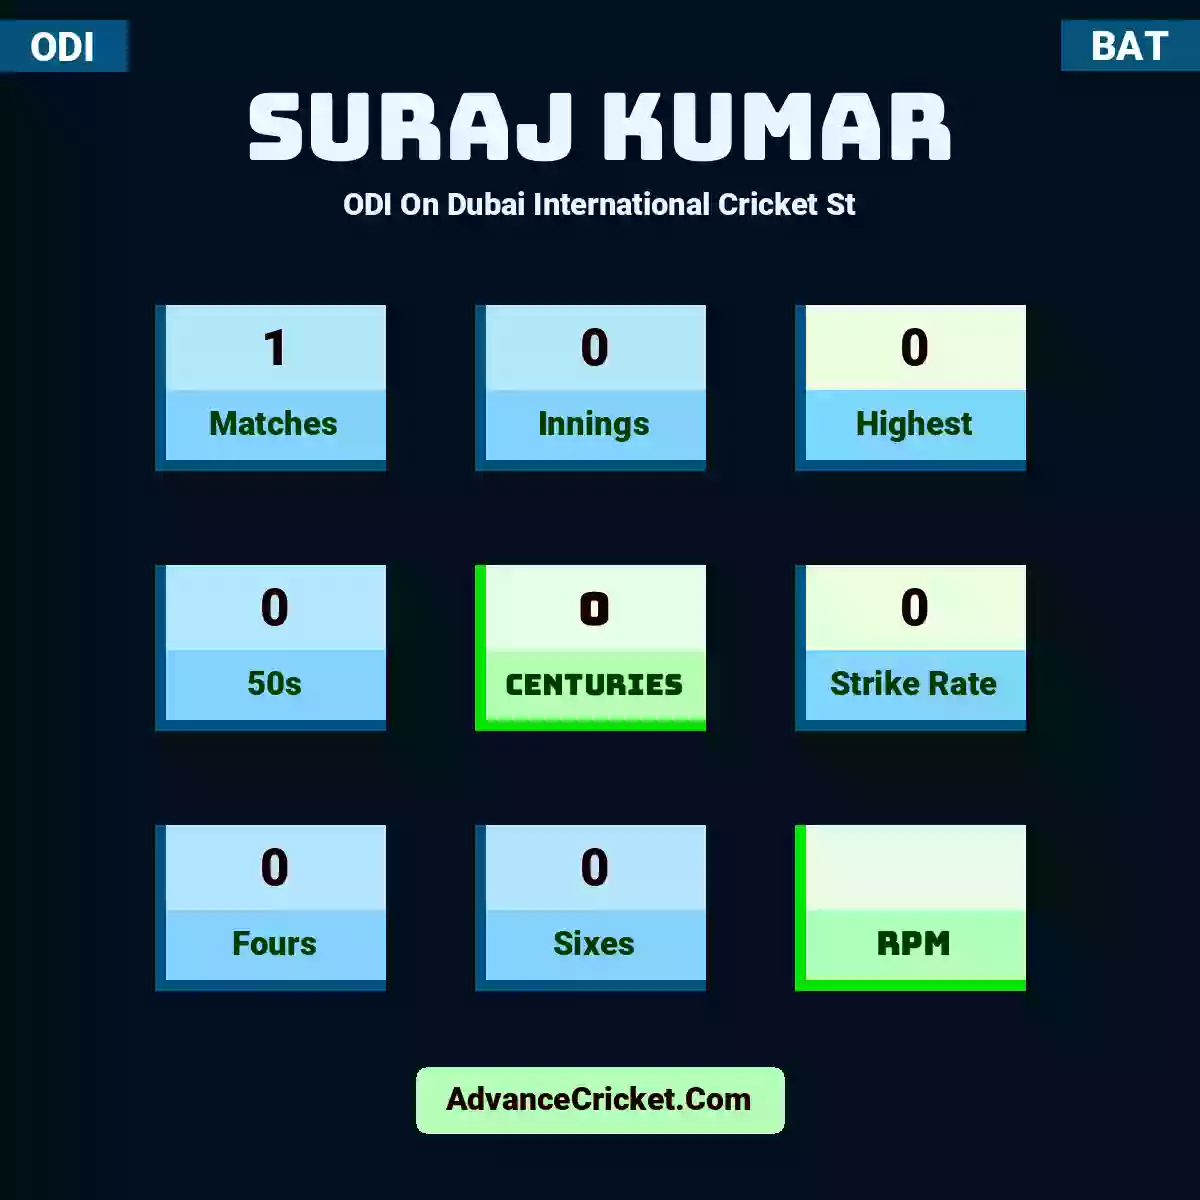 Suraj Kumar ODI  On Dubai International Cricket St, Suraj Kumar played 1 matches, scored 0 runs as highest, 0 half-centuries, and 0 centuries, with a strike rate of 0. S.Kumar hit 0 fours and 0 sixes.